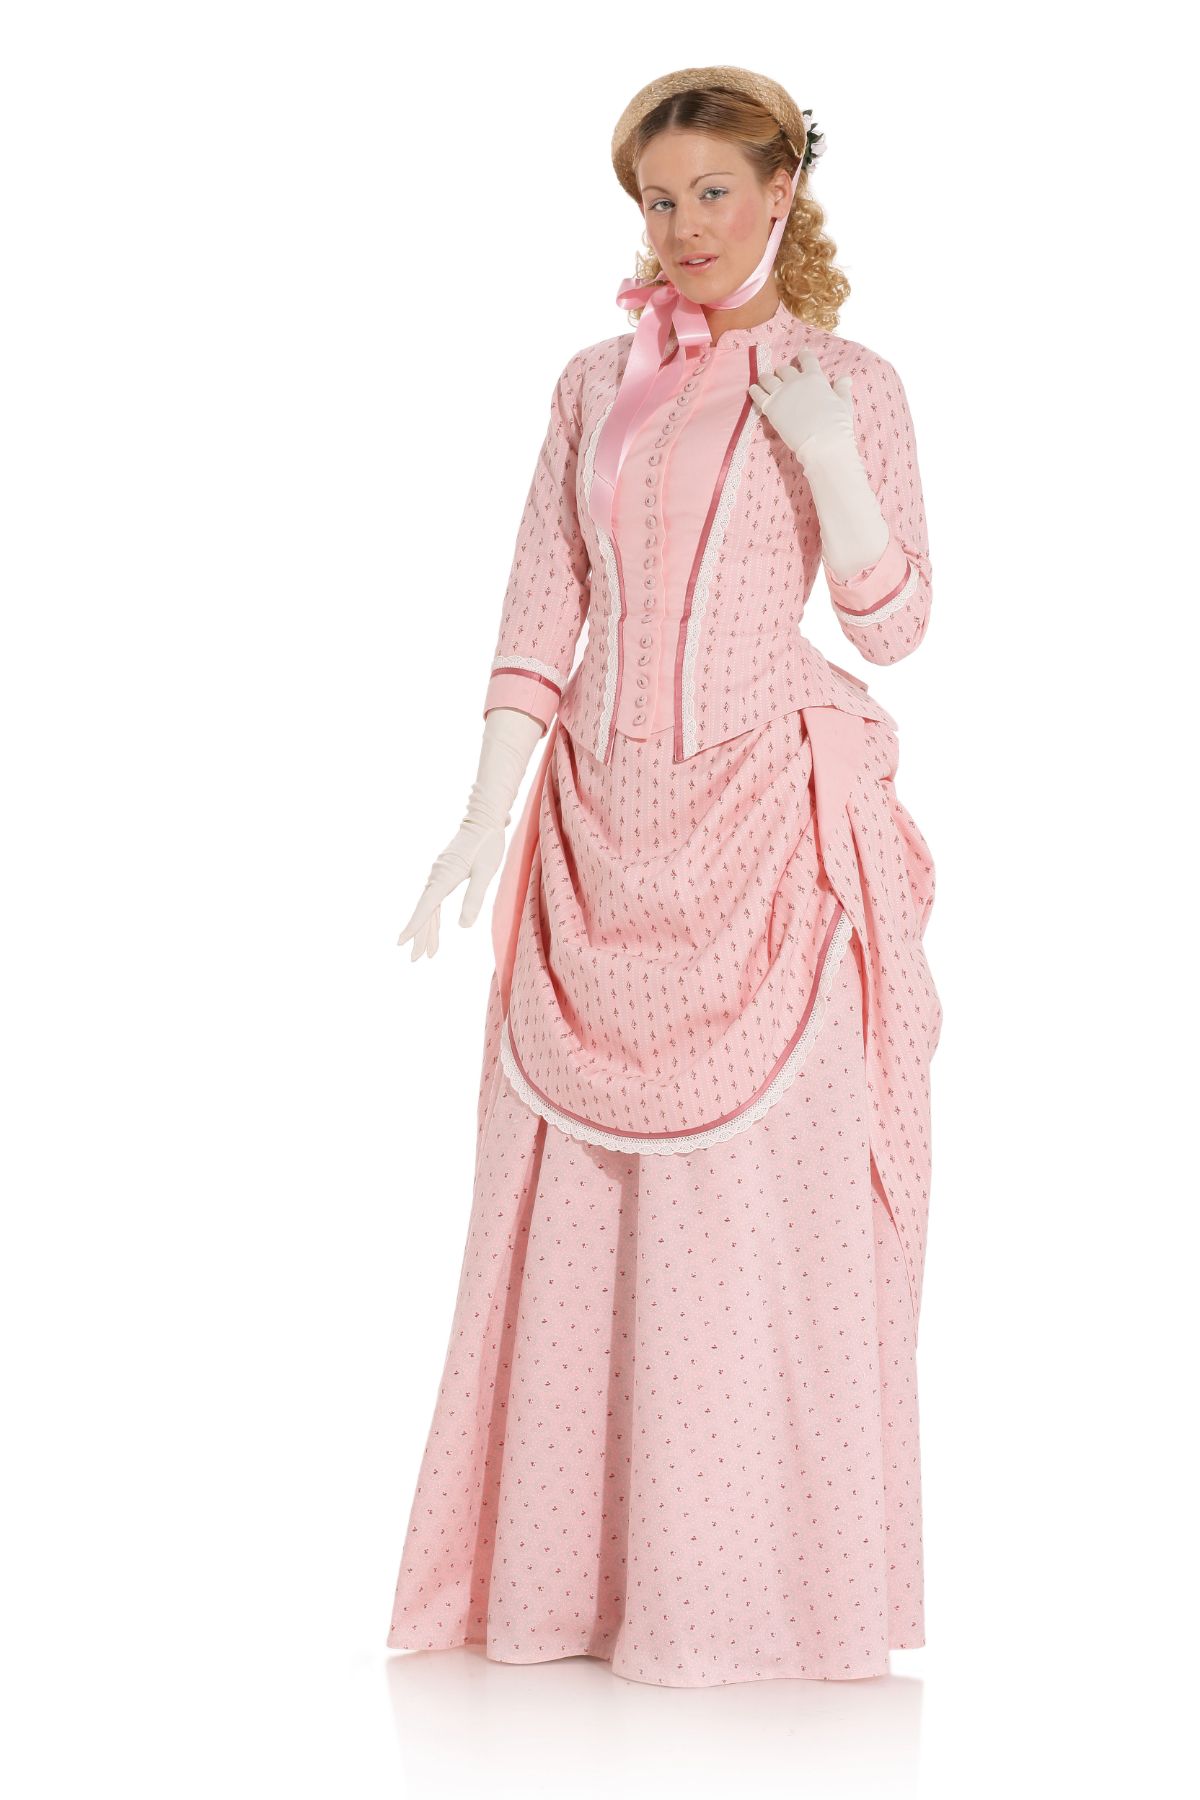 Burda Wit 7880 - Historische jurk uit 1888